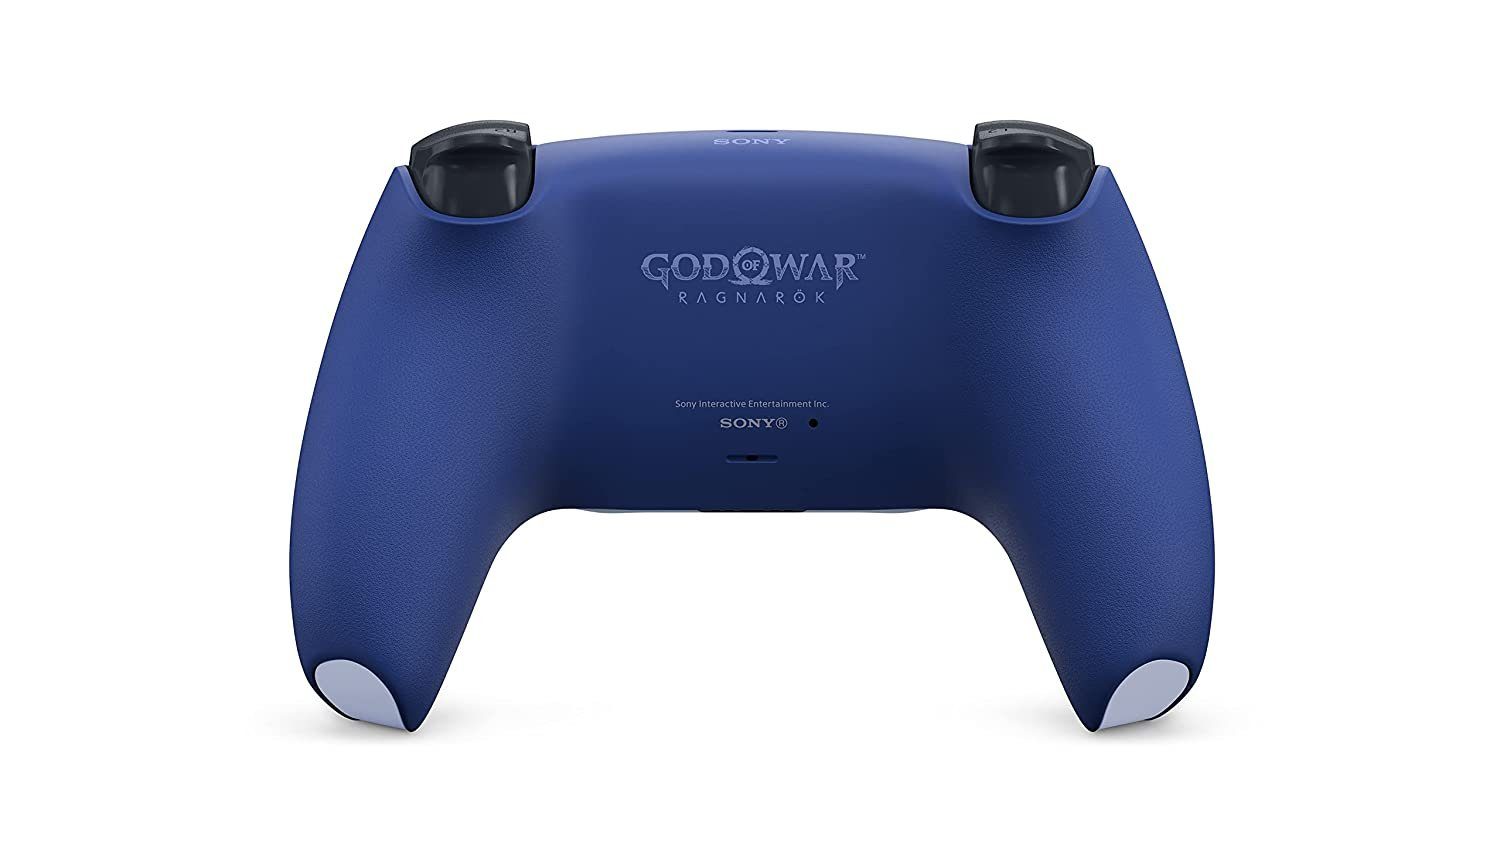 Playstation 5 Controller Wireless of 5-Controller PlayStation Sony Original DualSense War: Limited Edition God Ragnarök